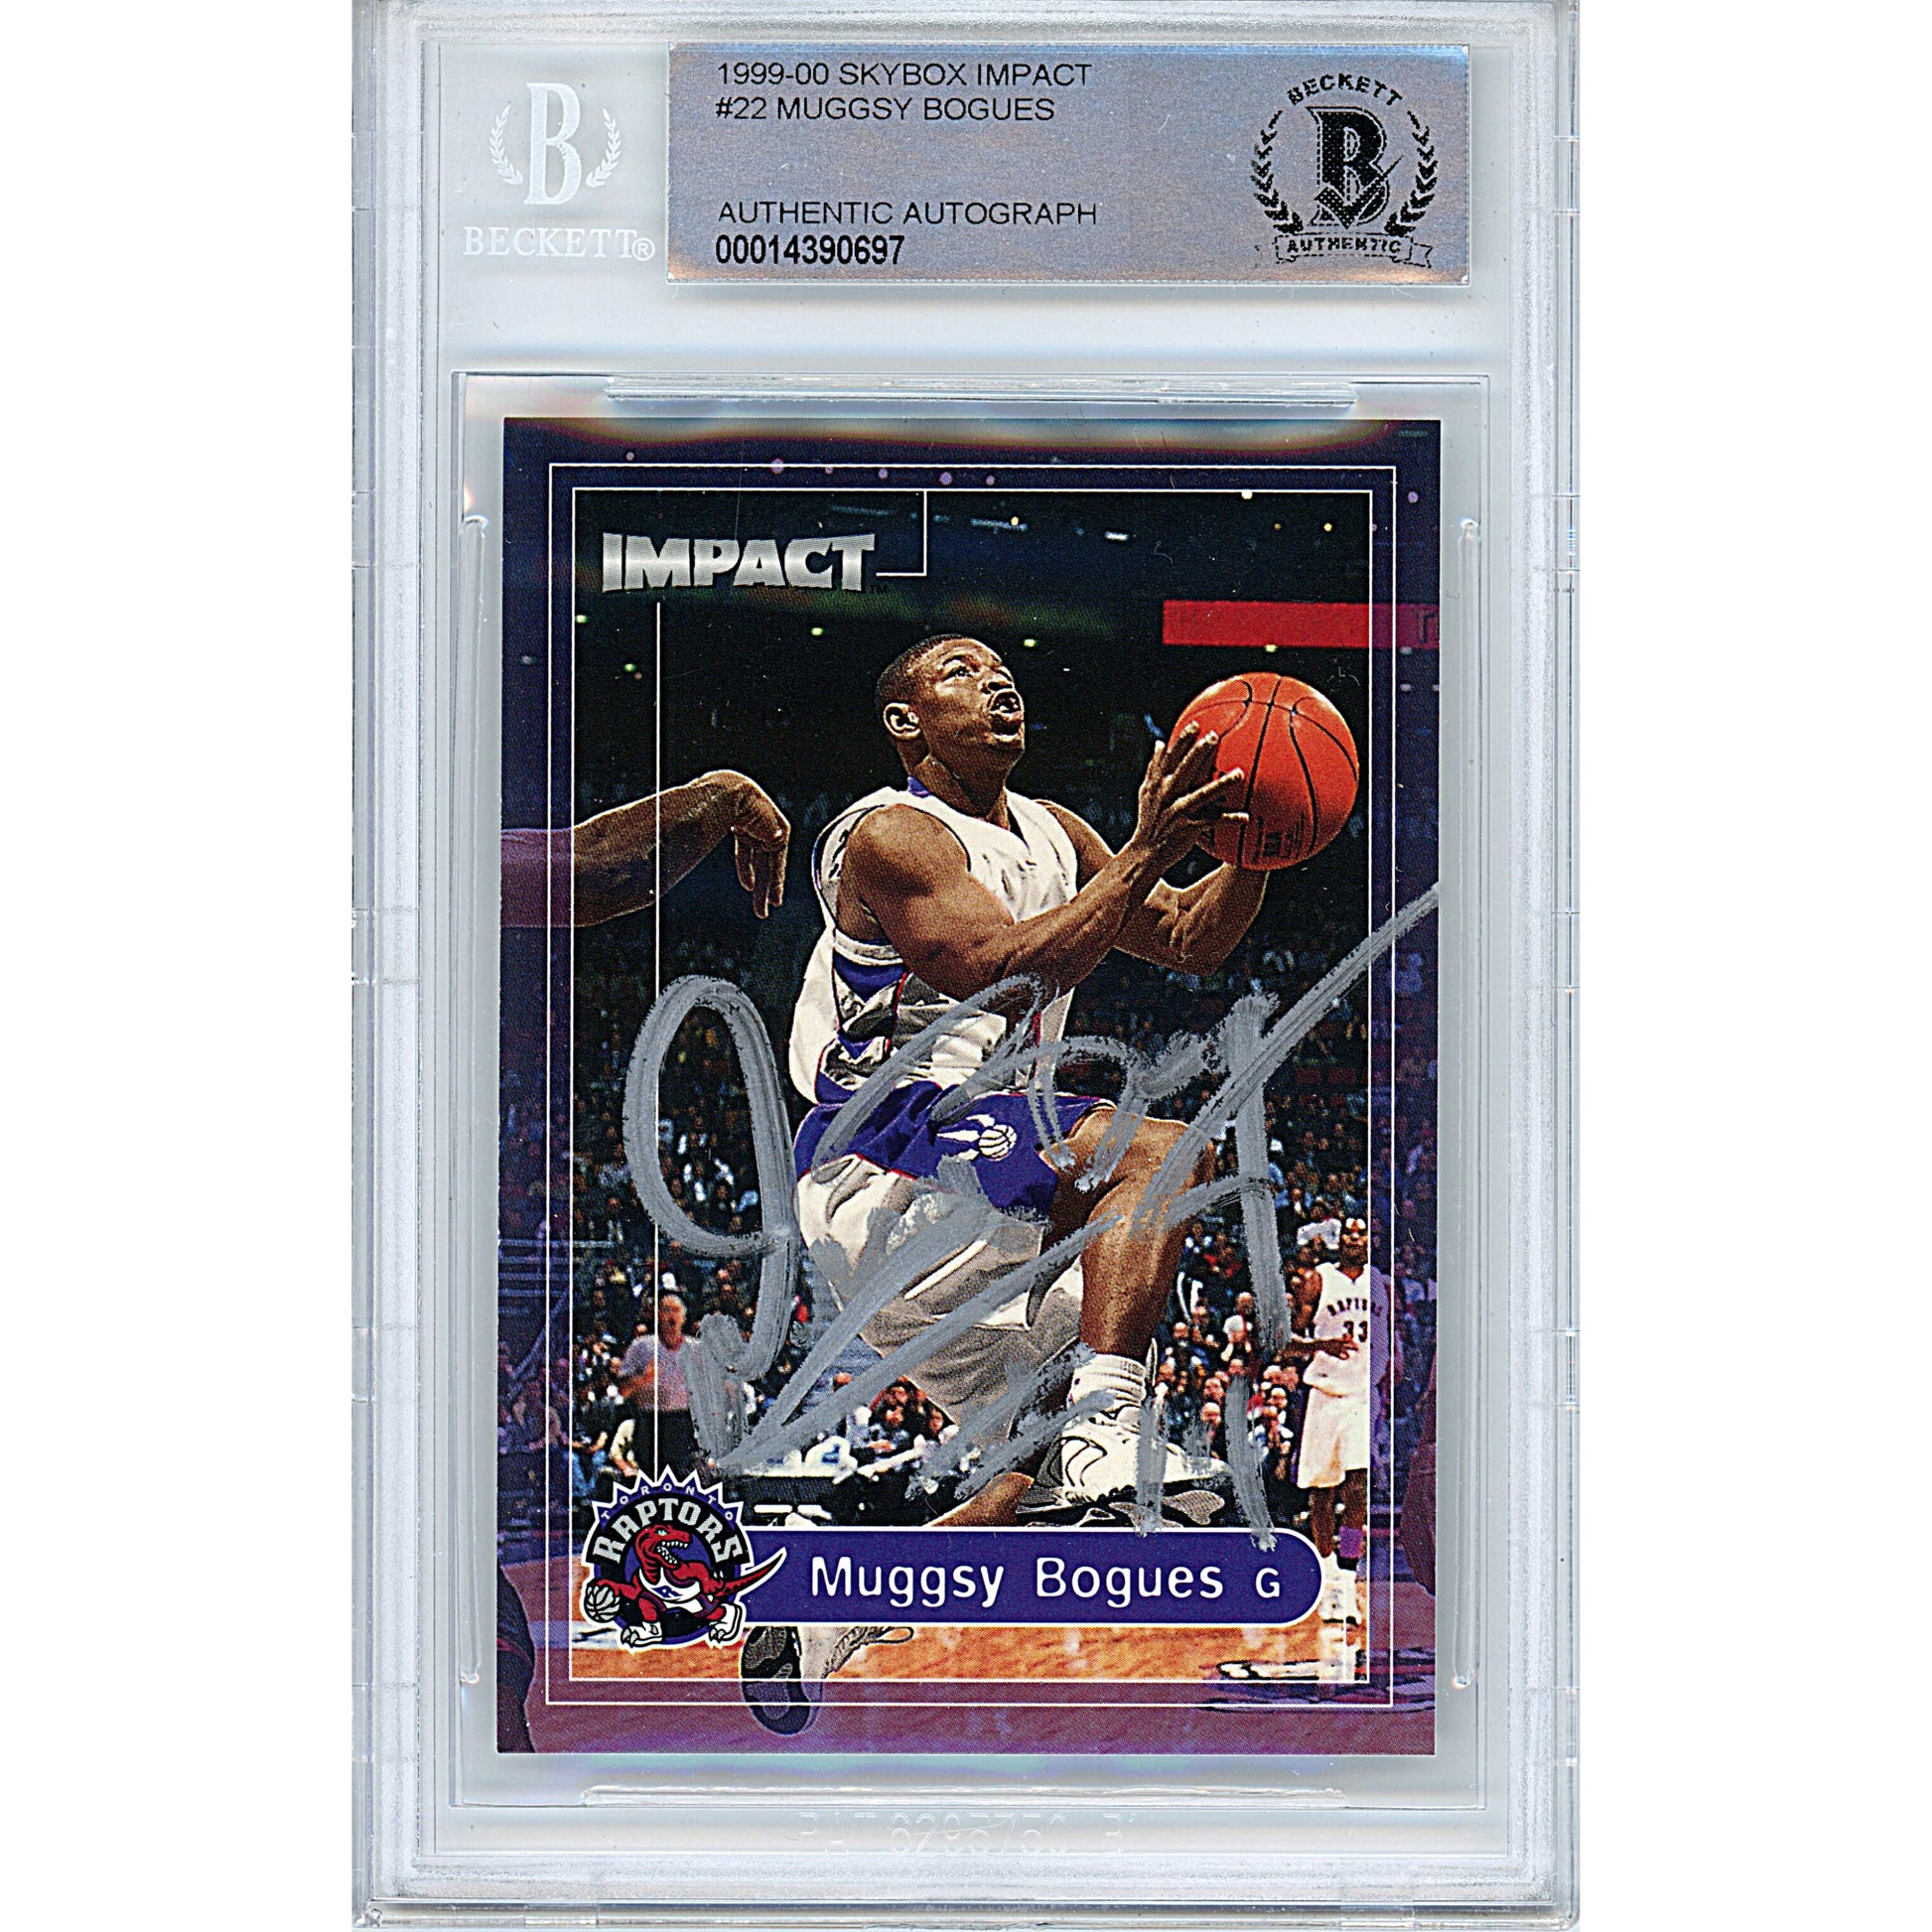 Basketballs- Autographed- Muggsy Bogues Signed Toronto Raptors 1999-2000 Skybox Impact Basketball Card Beckett Slabbed 00014390697 - 101